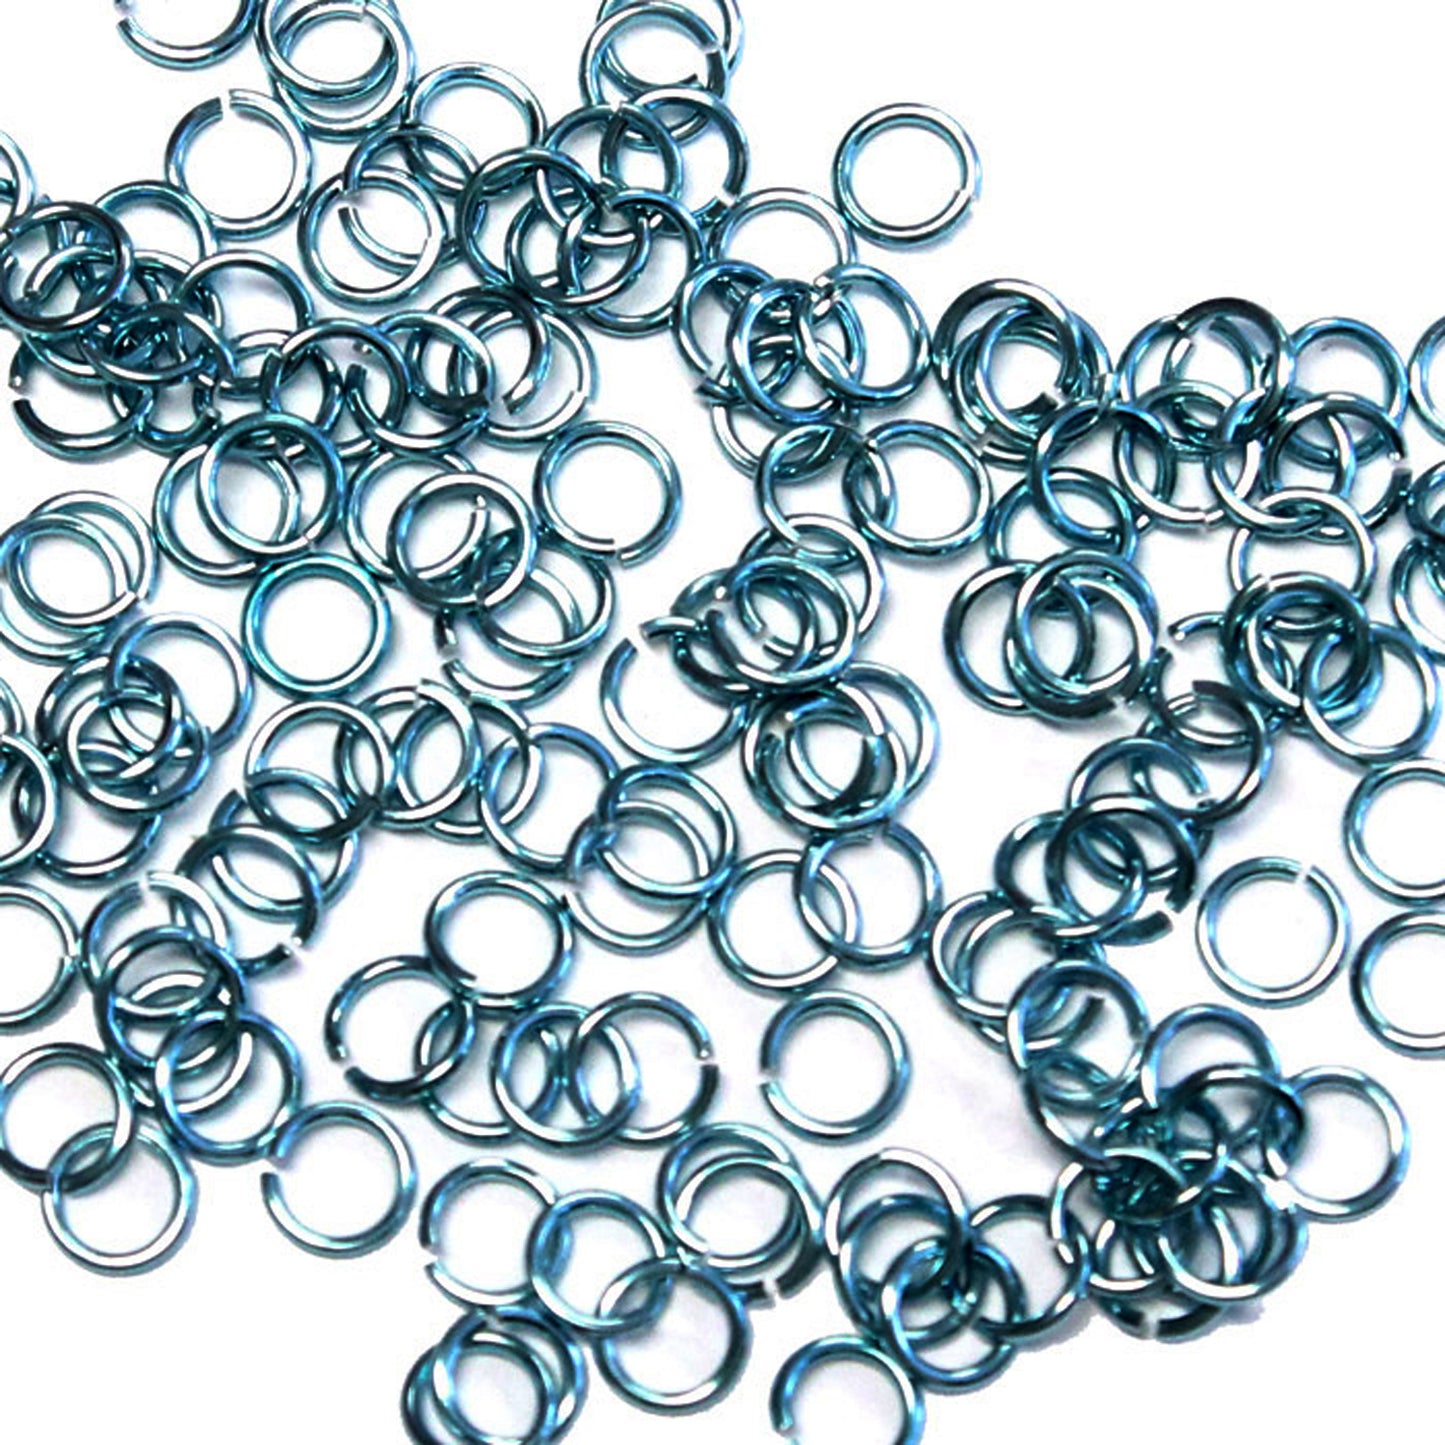 SHINY DARK SKY BLUE 3.4mm 20 GA Jump Rings / 5 Gram Pack (approx 275) / sawcut round open anodized aluminum